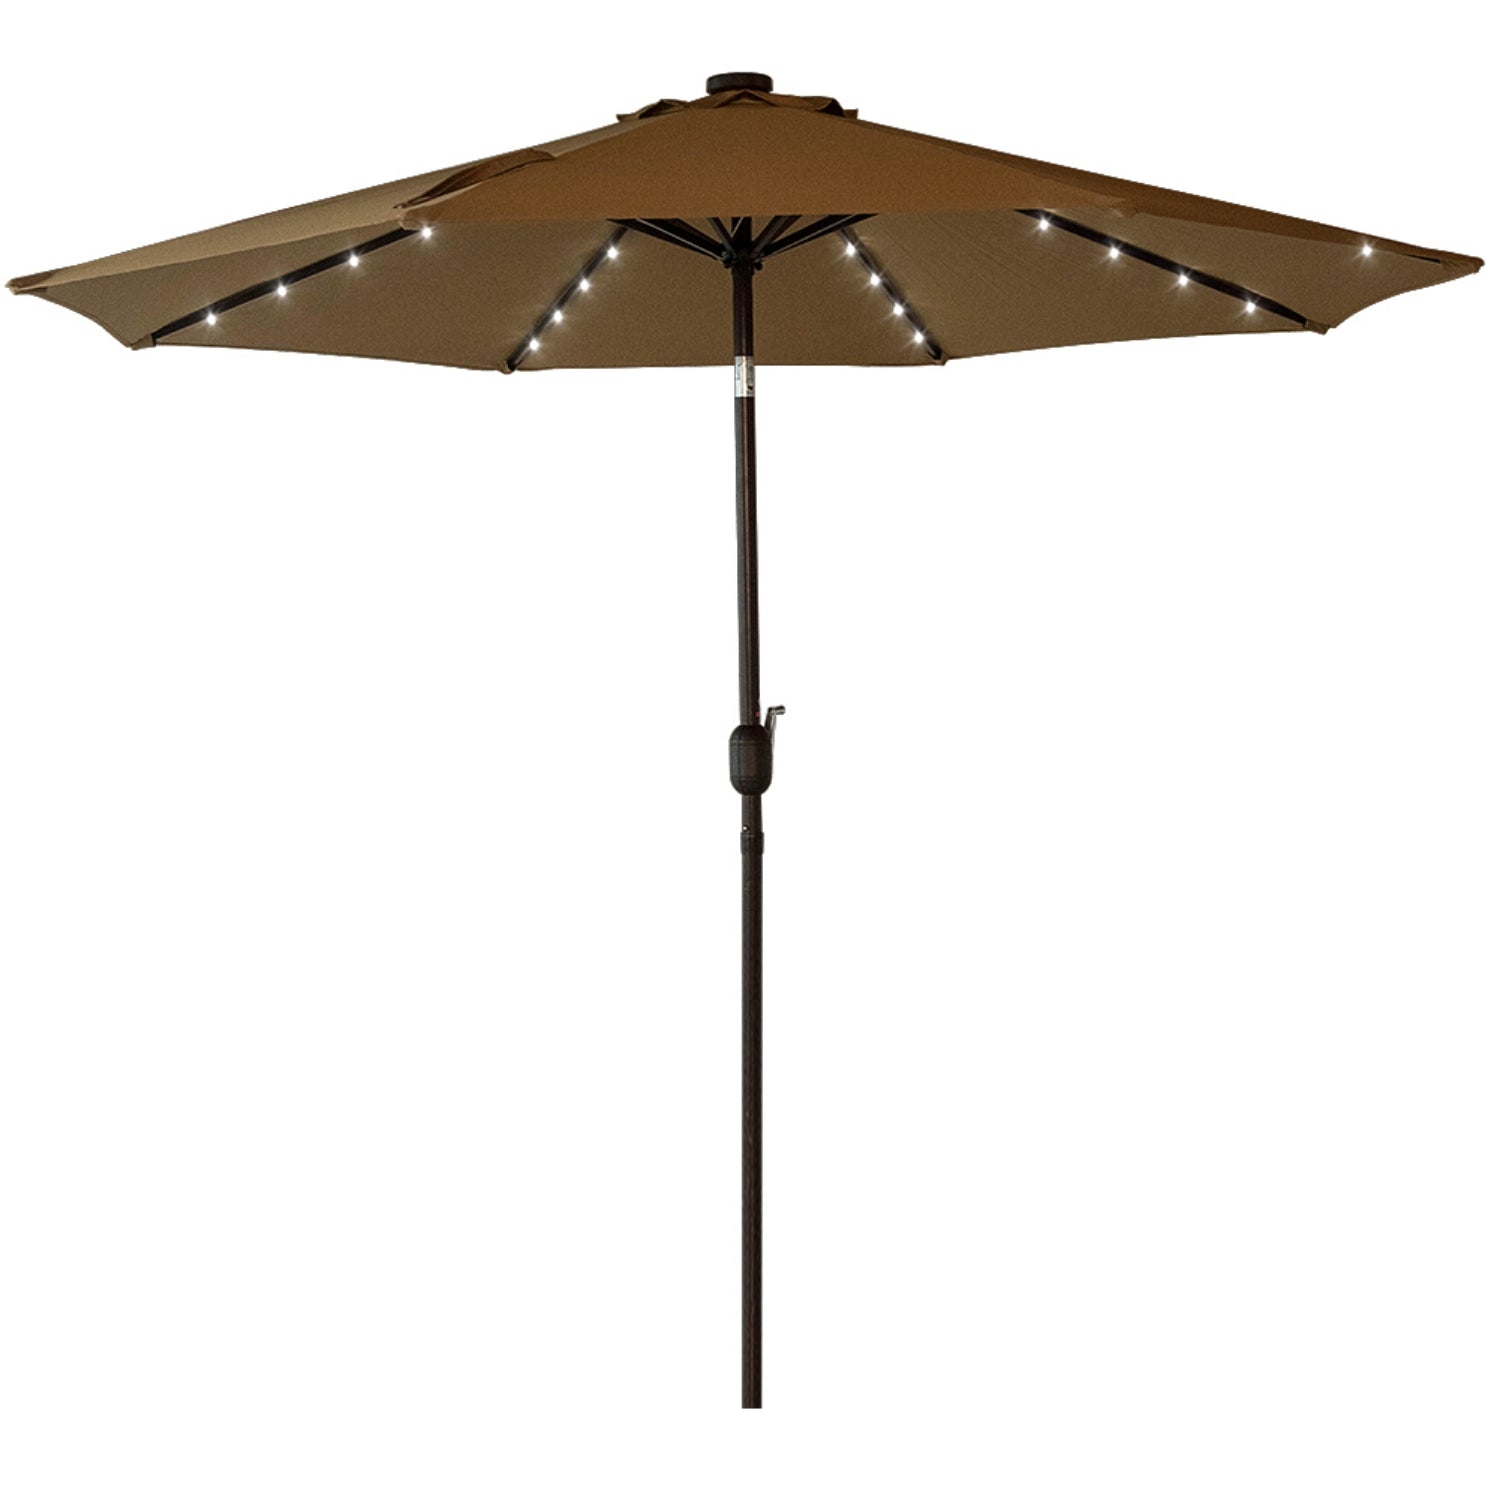 Sunnydaze Patio Umbrella Light - 18 LEDs - Battery Operated Camping Tent  Light - Bed Bath & Beyond - 16635777